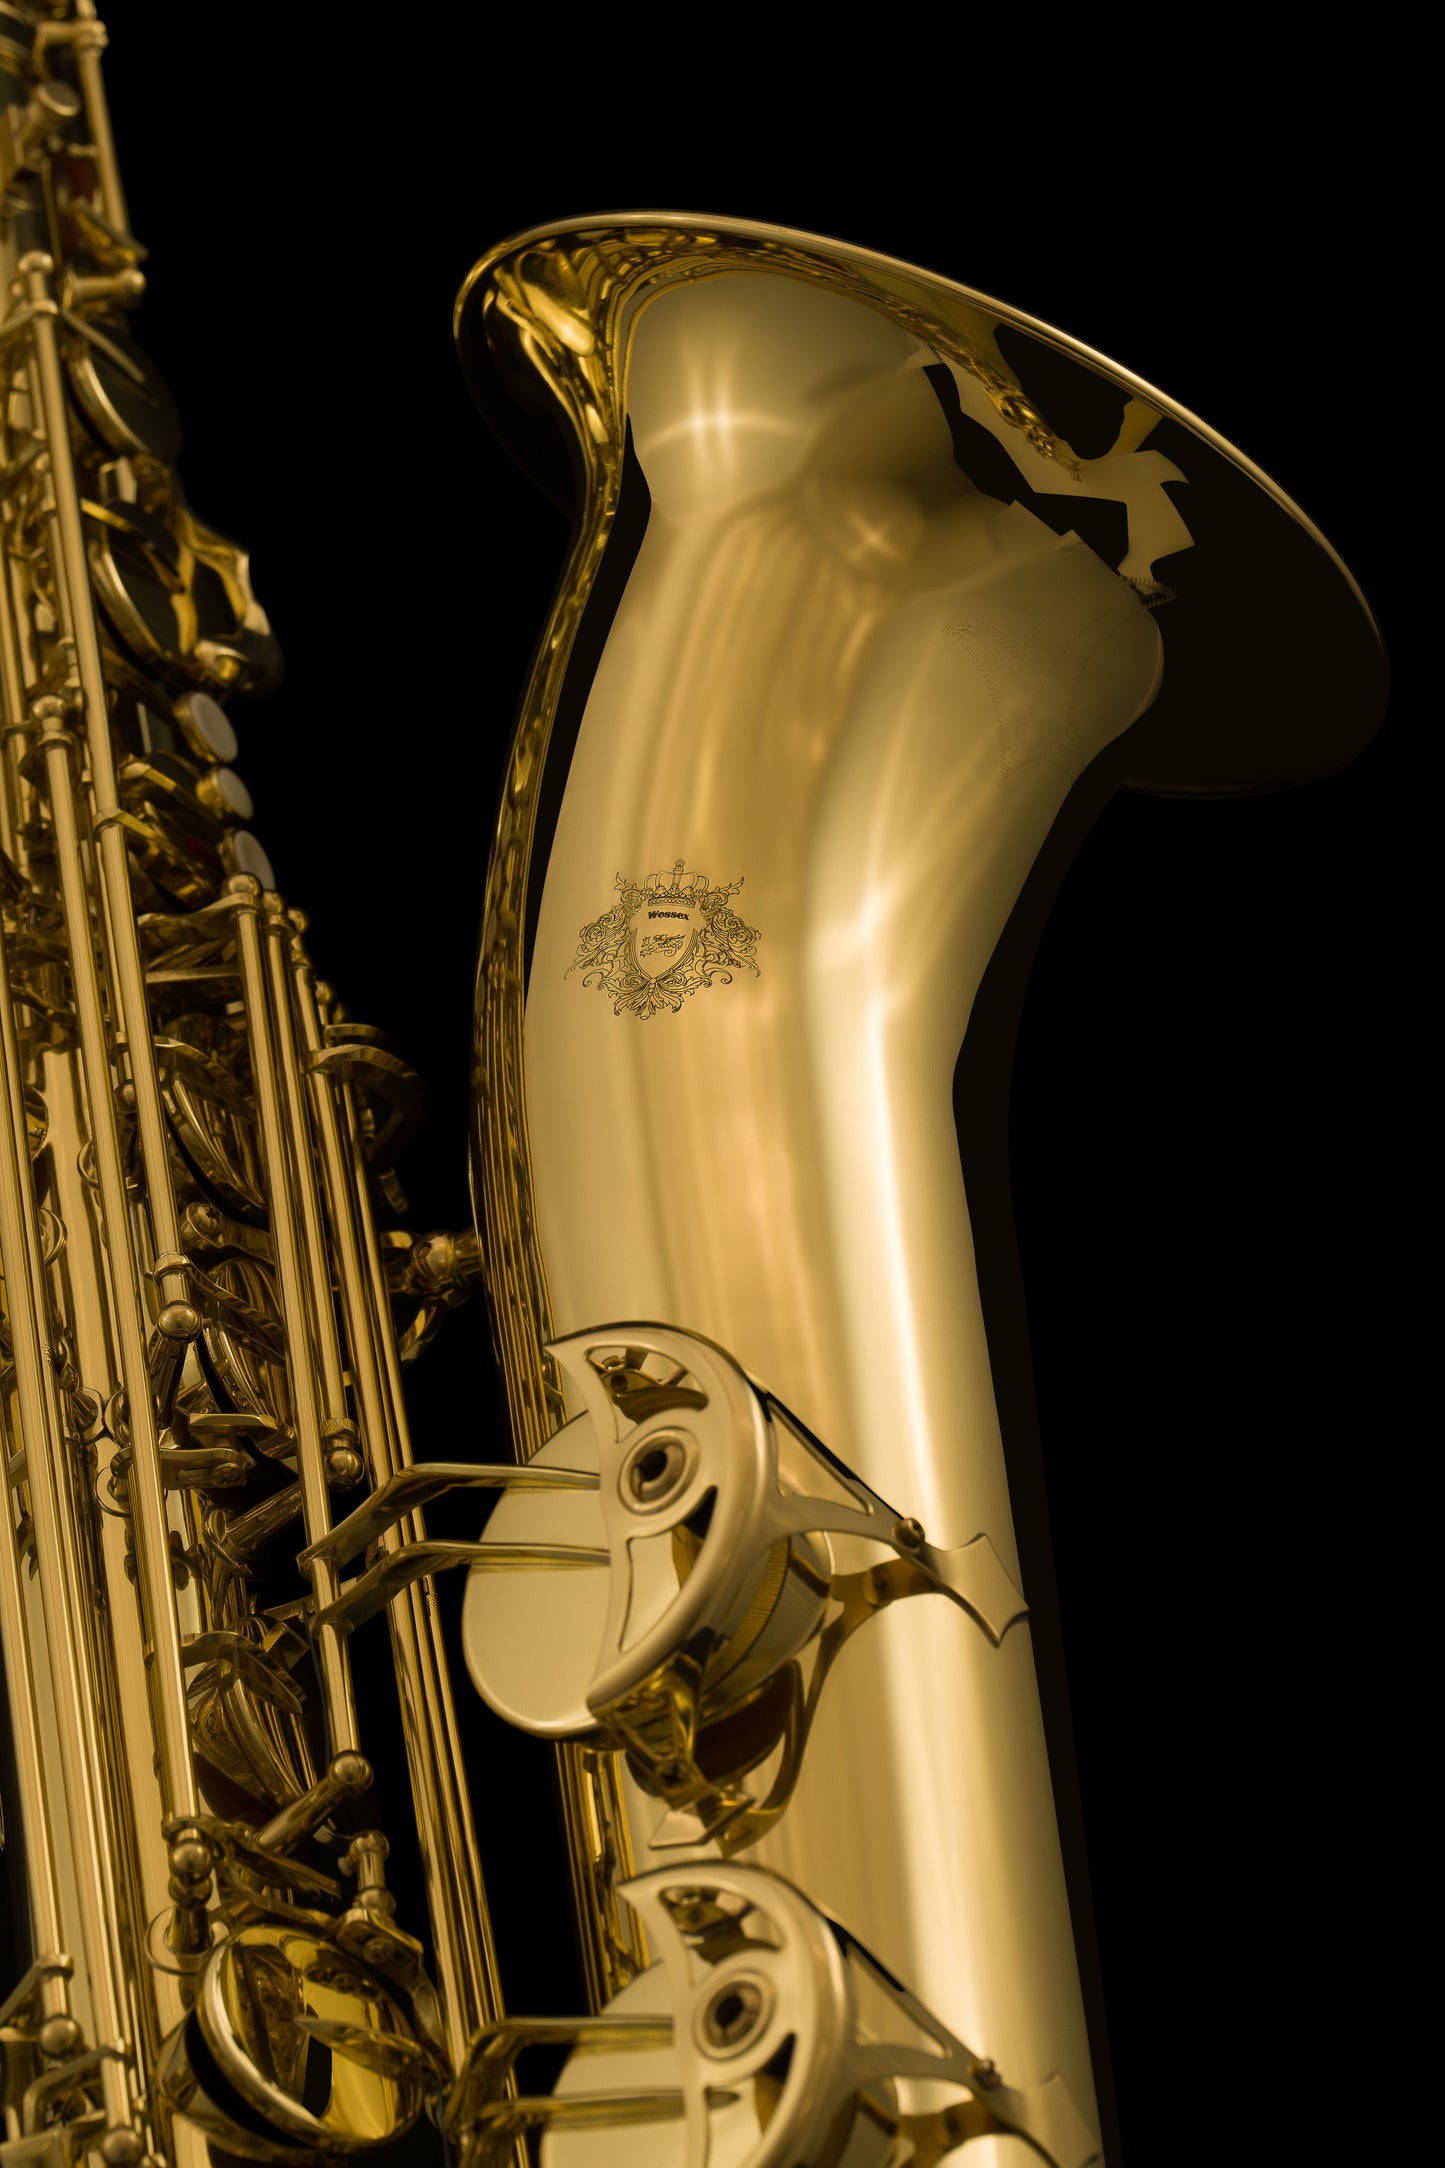 Baritone Saxophone - SAX110